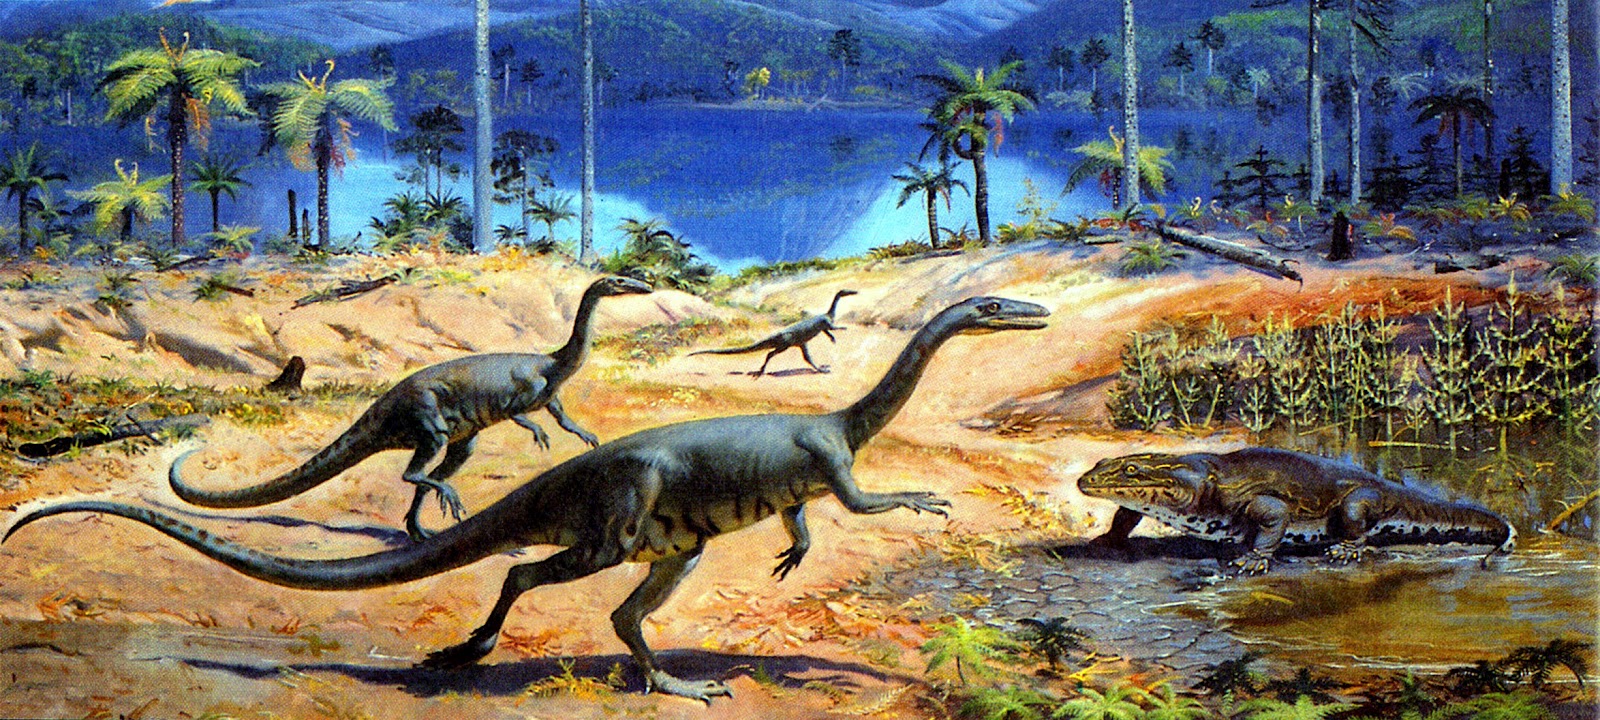 Помнишь мезозойскую. Зденек Буриан палеохудожники. Зденек Буриан динозавры. Целофизисы Зденека Буриана. Целофизисы мезозойской эры.